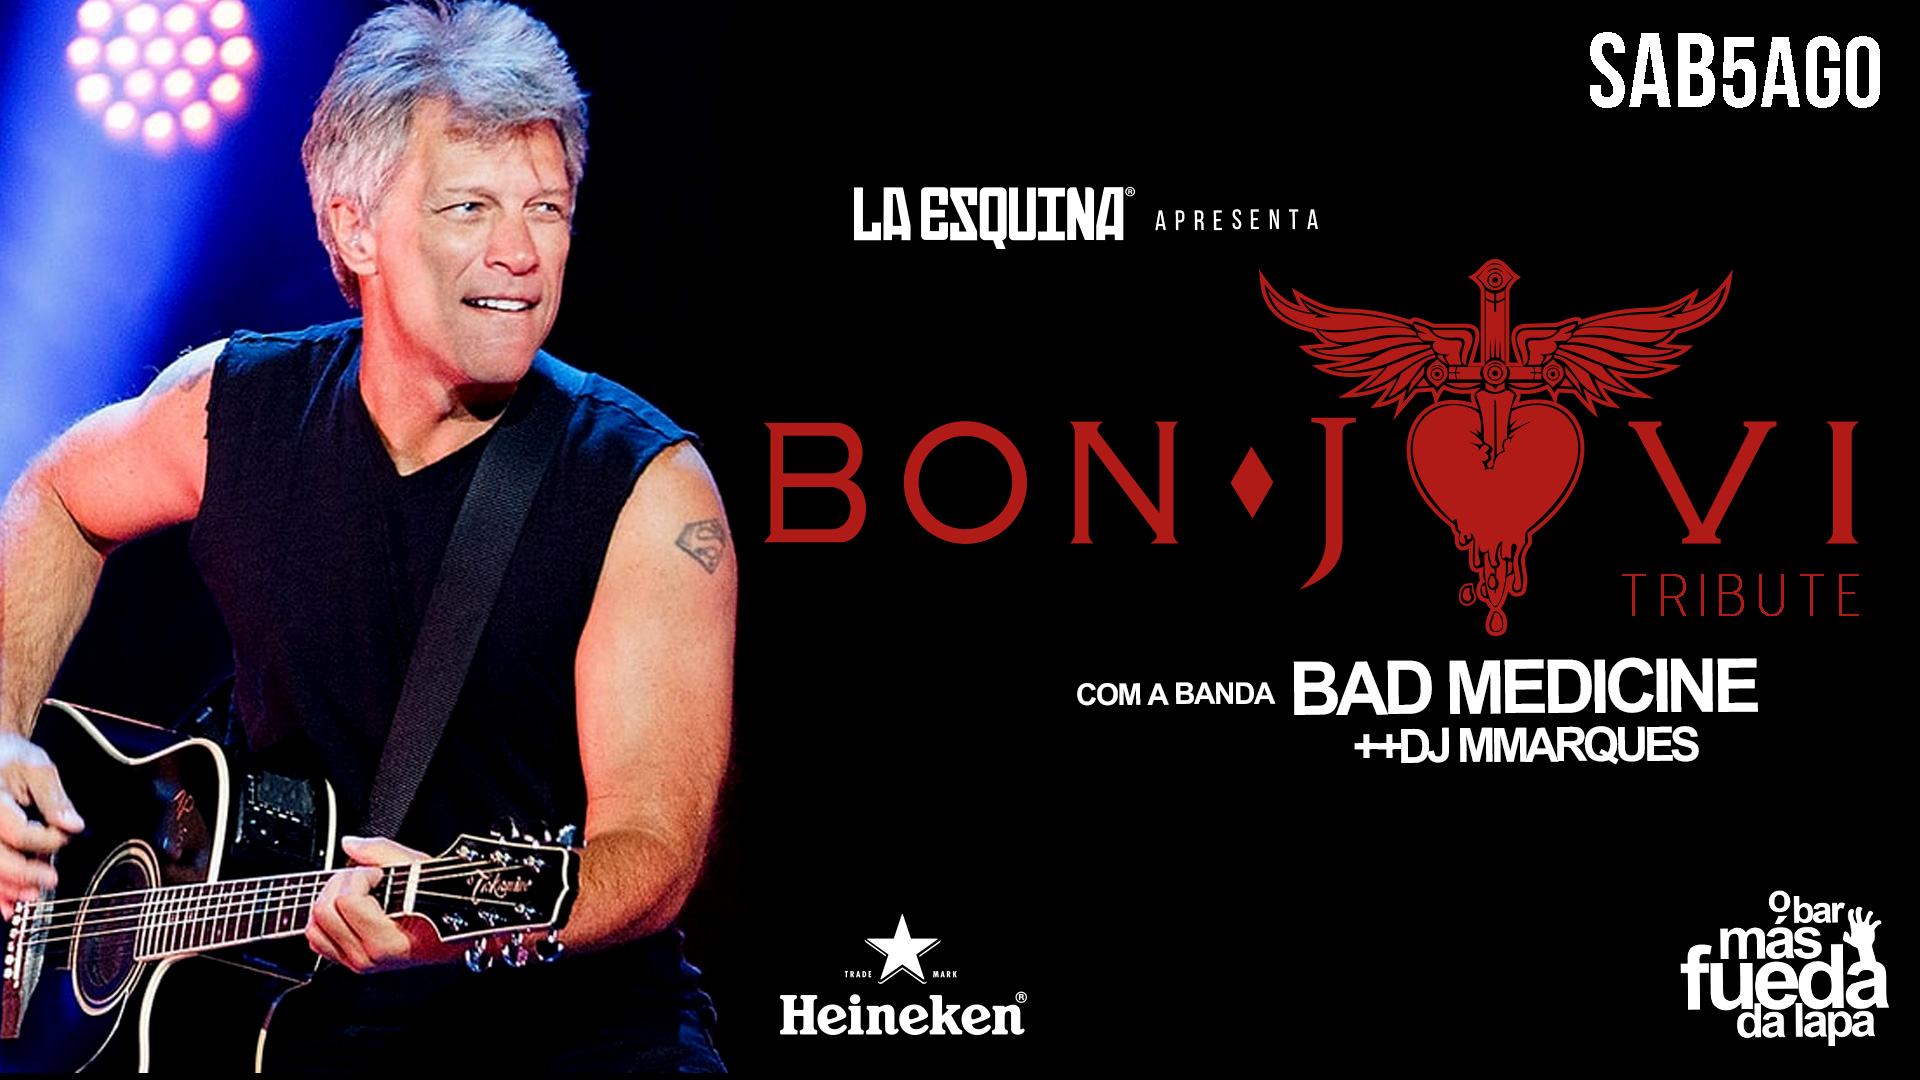 Sunday - Bon Jovi Tribute: Banda Bad Medicine